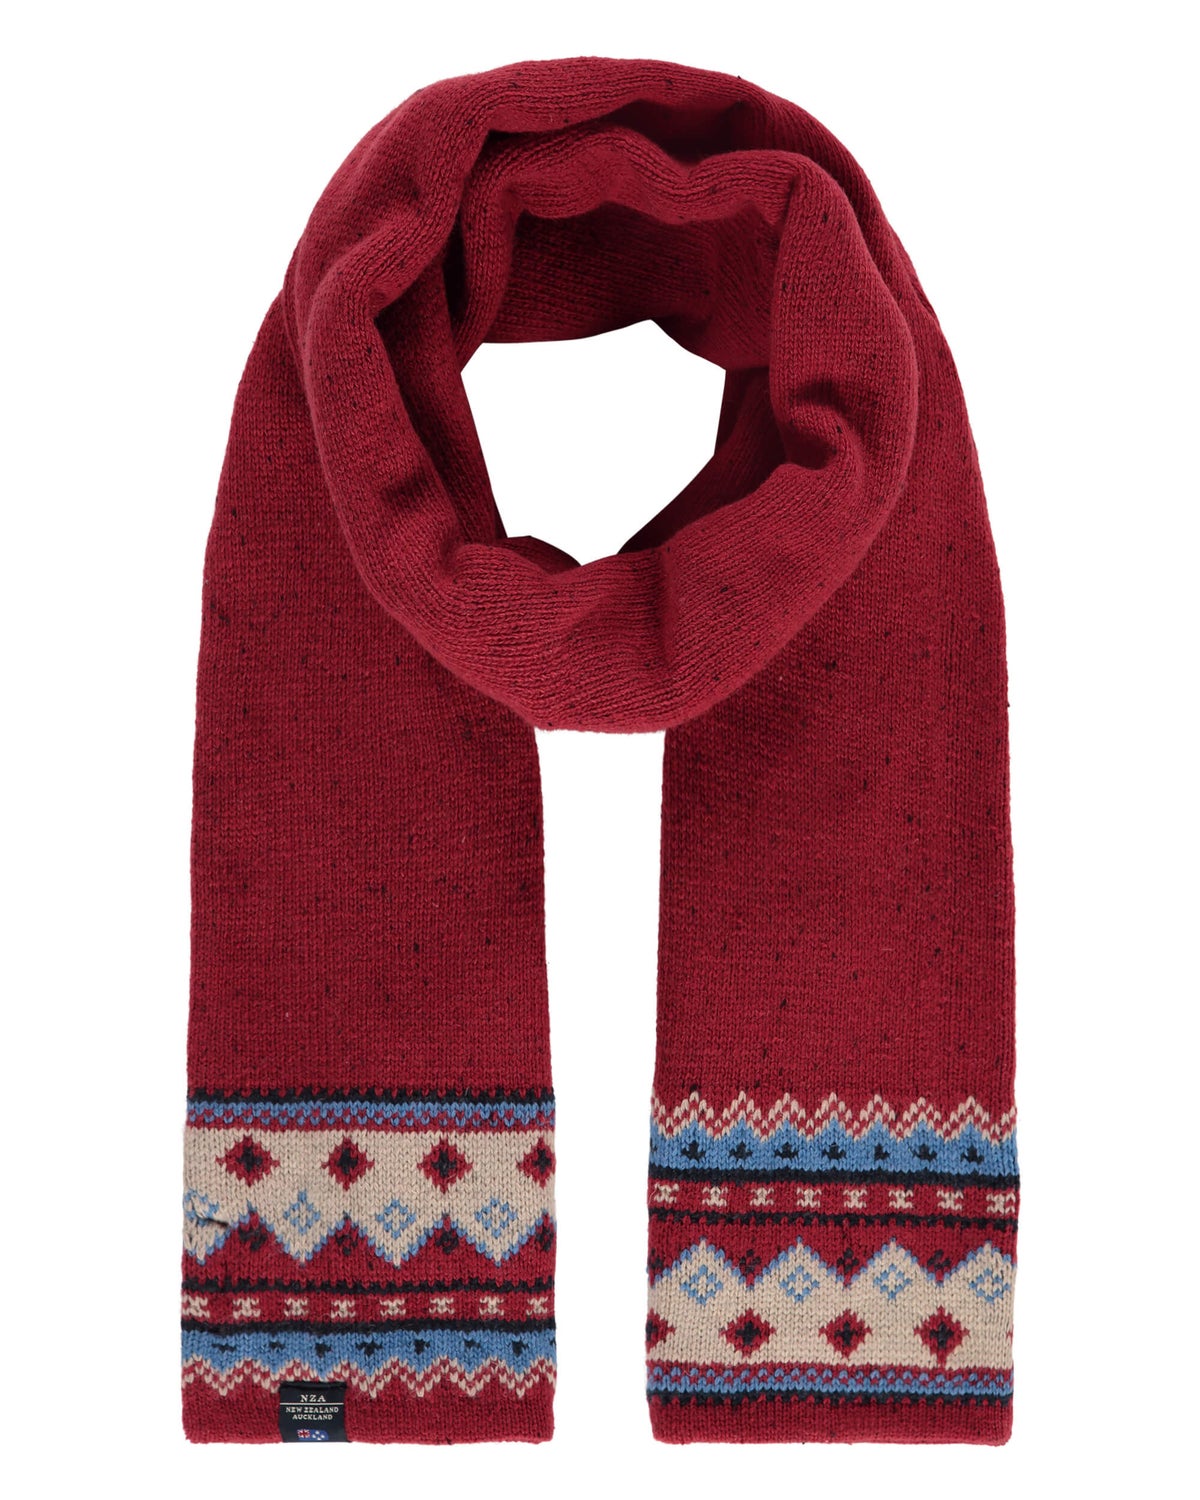 Knitted scarf Otatua - Cardinal Red